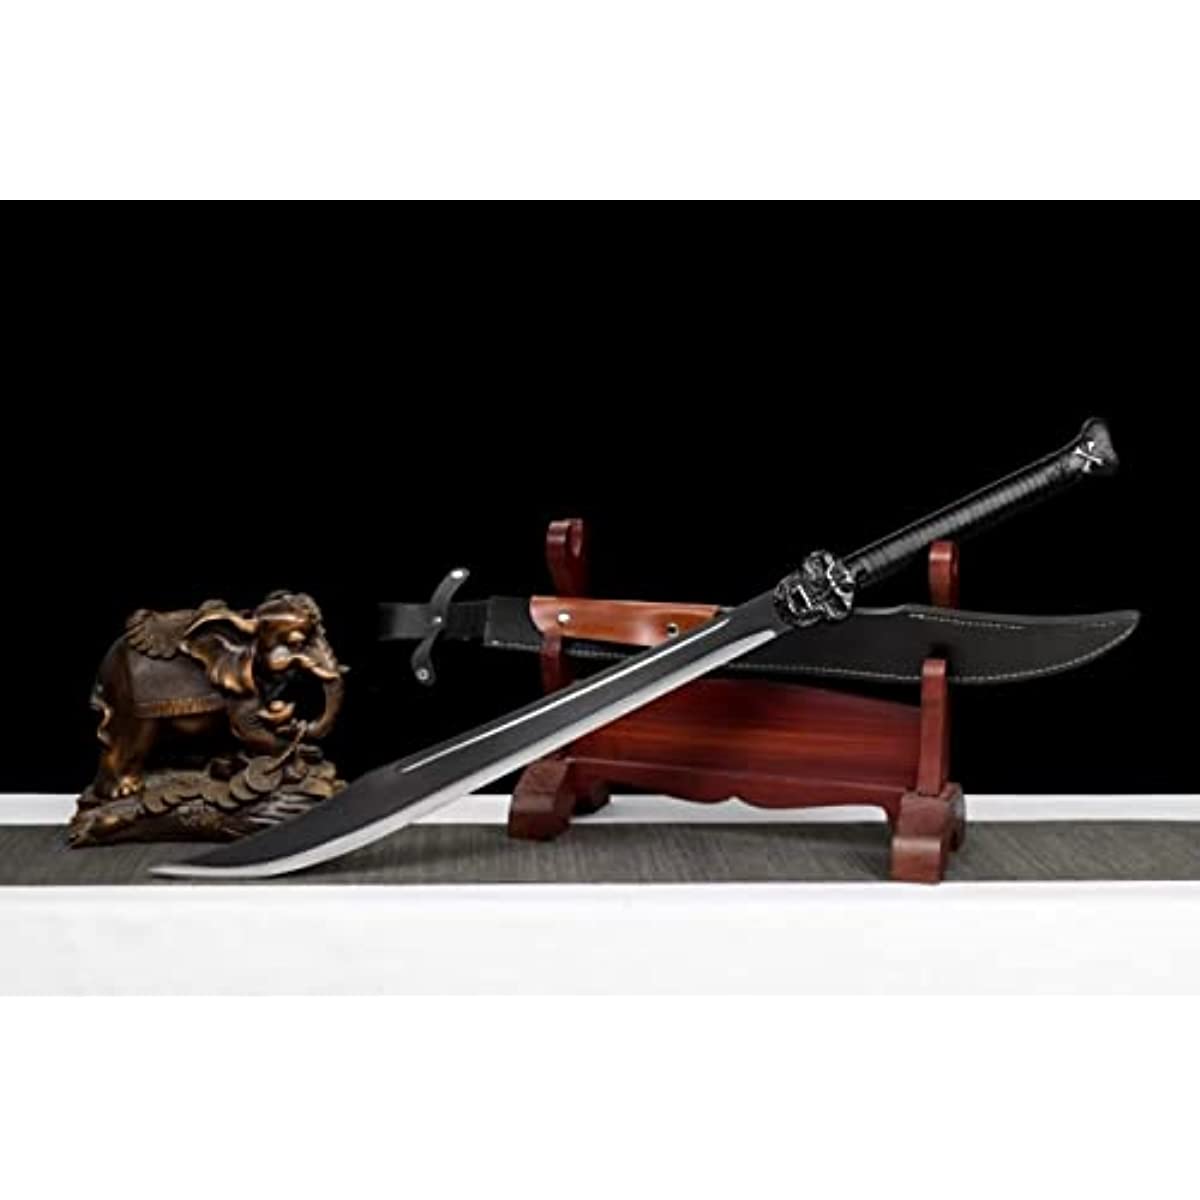 LOONGSWORD,chinese sword,DaDao,Broadsword,High Carbon Steel Blade,PU Scabbard Length 36"